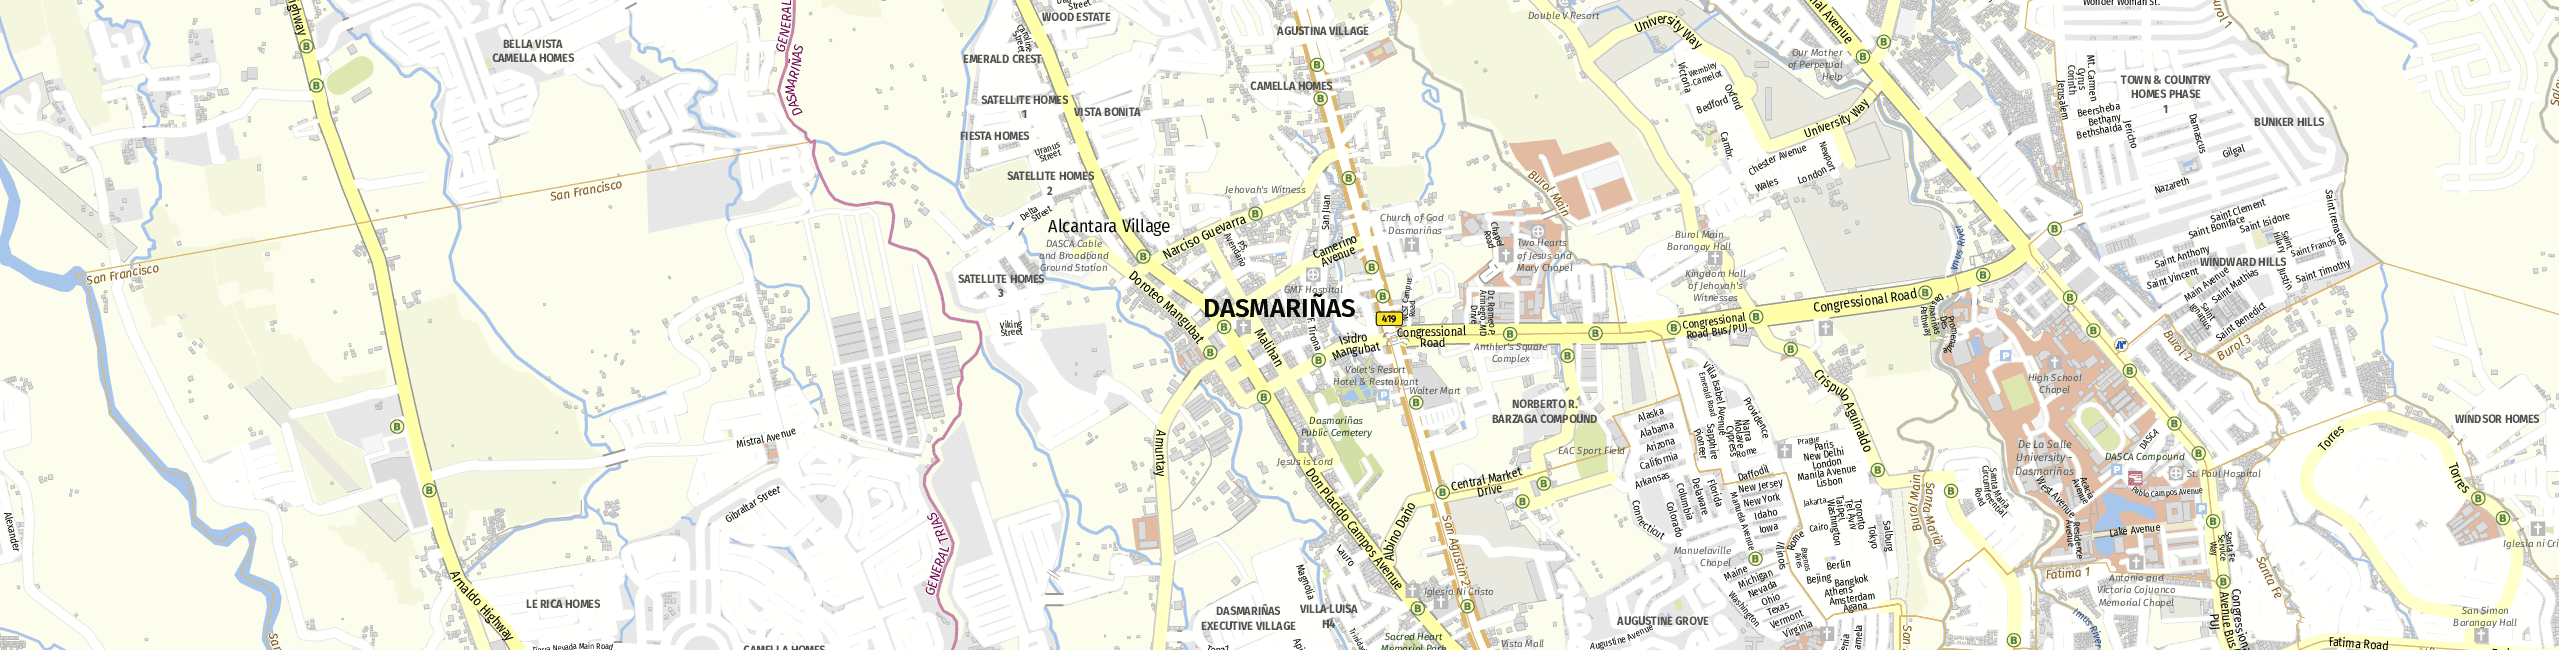 Stadtplan Dasmariñas zum Downloaden.